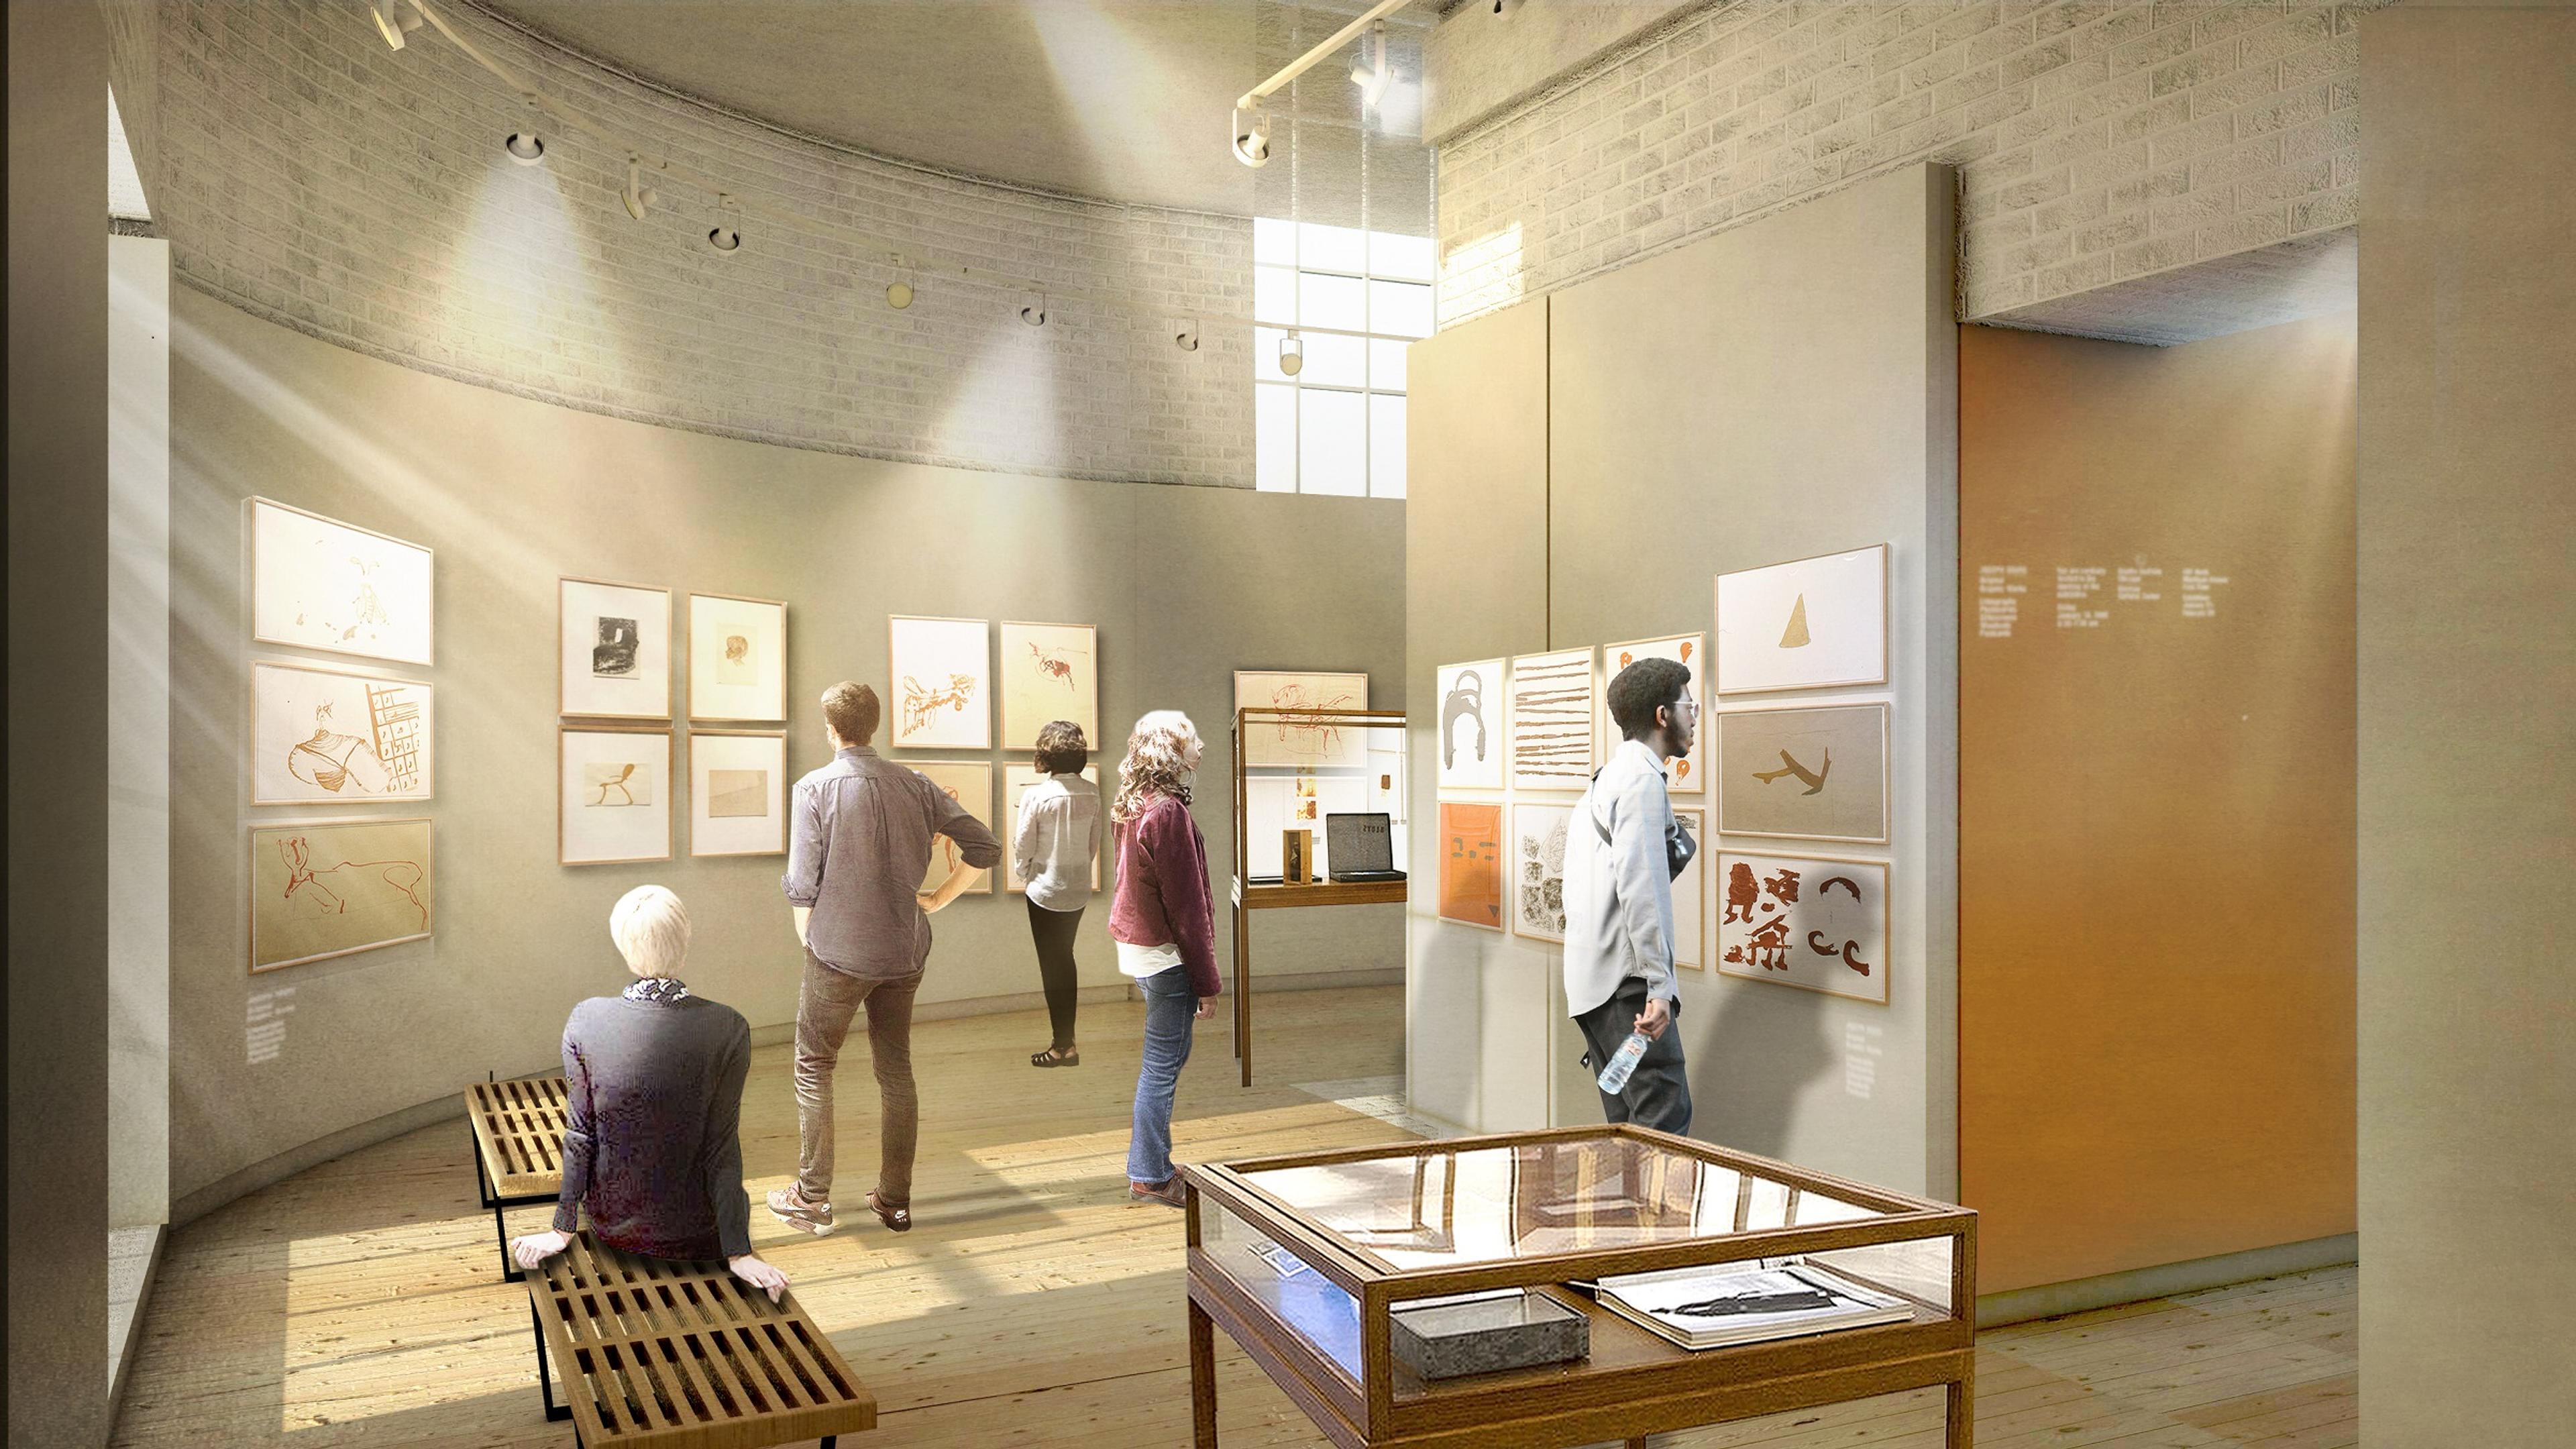 Digital rendering of people looking at an exhibition